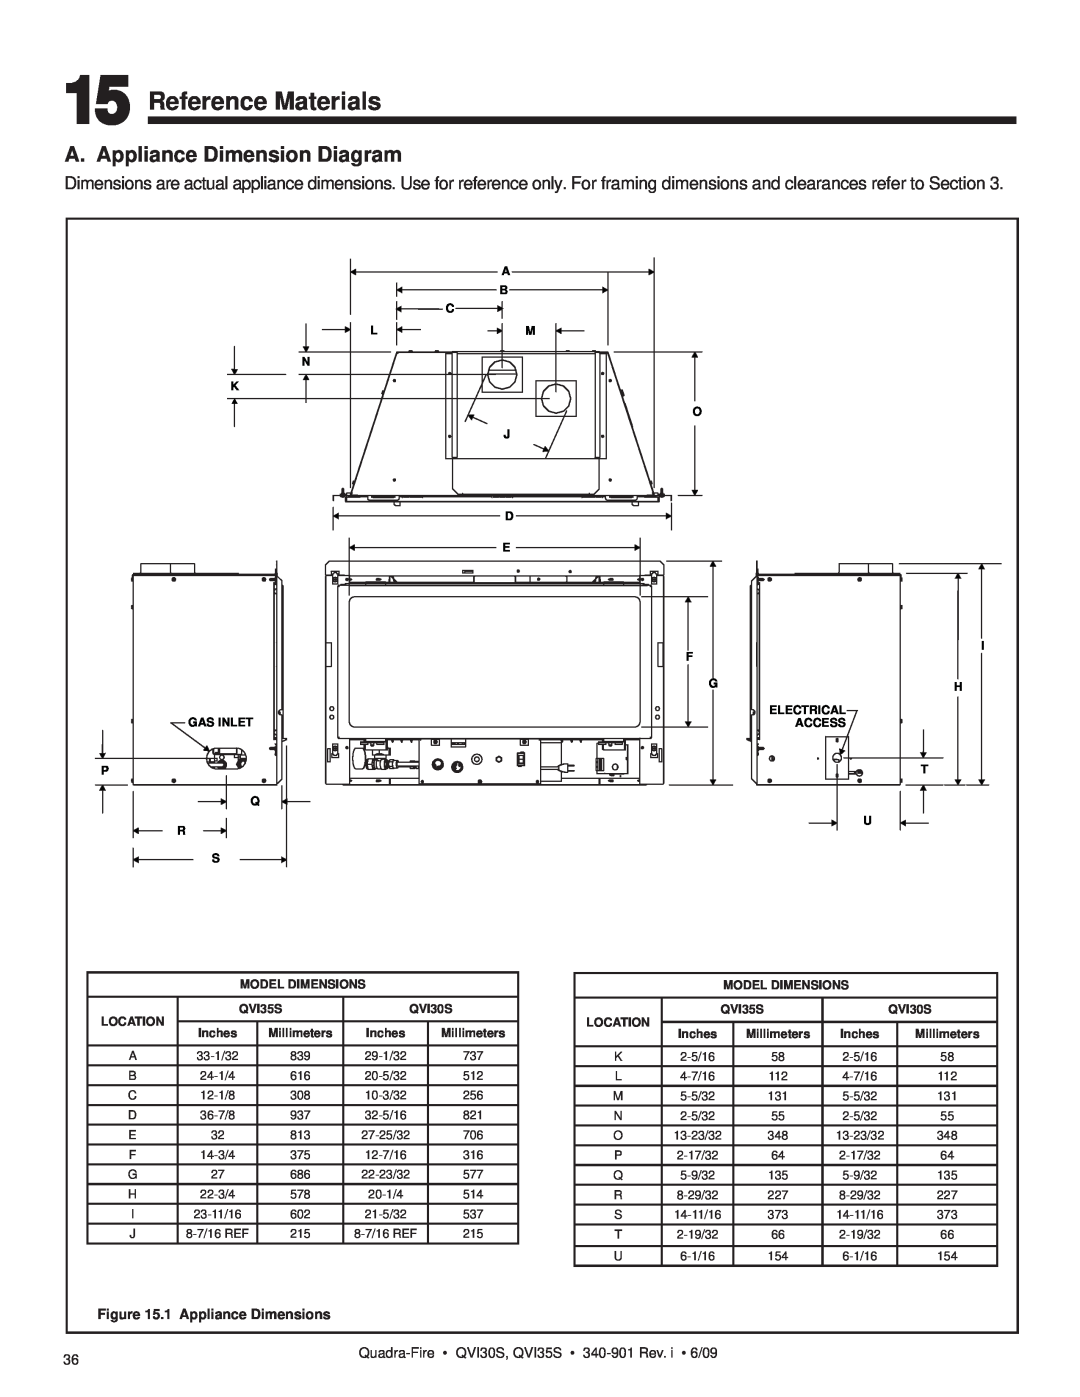 Quadra-Fire QVI35S, QVI30S Reference Materials, A. Appliance Dimension Diagram, 1 Appliance Dimensions, A B C M J 